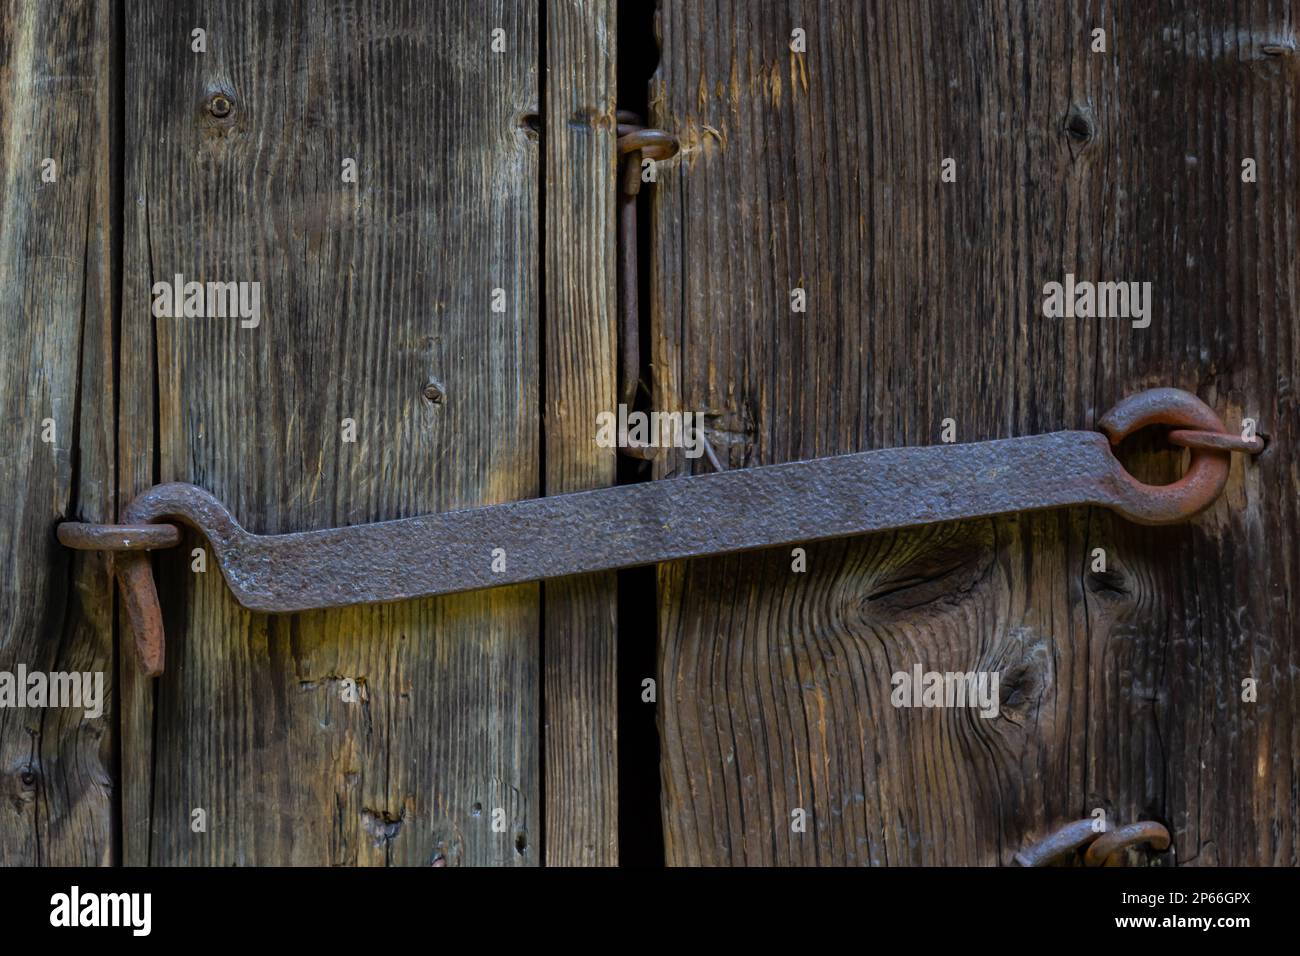 Old rusty lock on the wooden door, background. Stock Photo